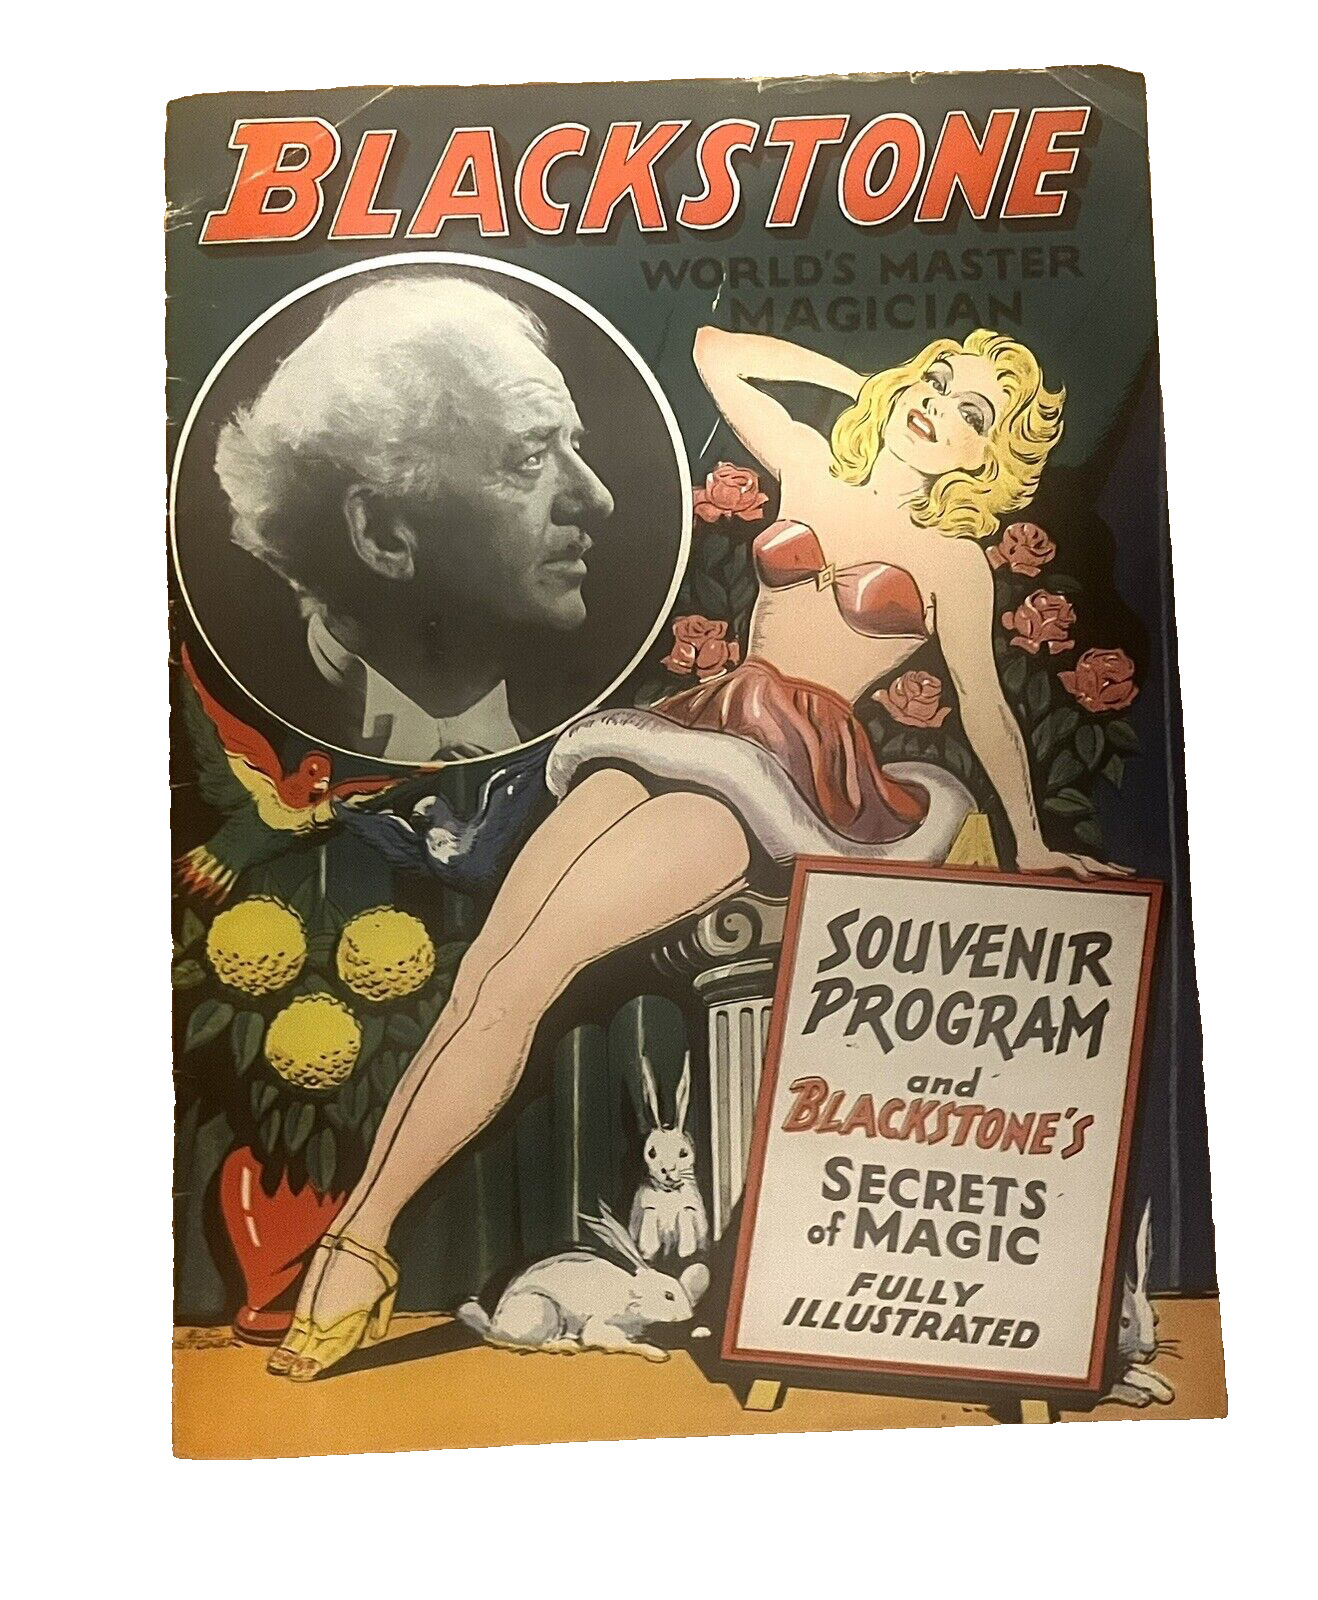 Blackstone World's Master Magician Souvenir Program 1930's